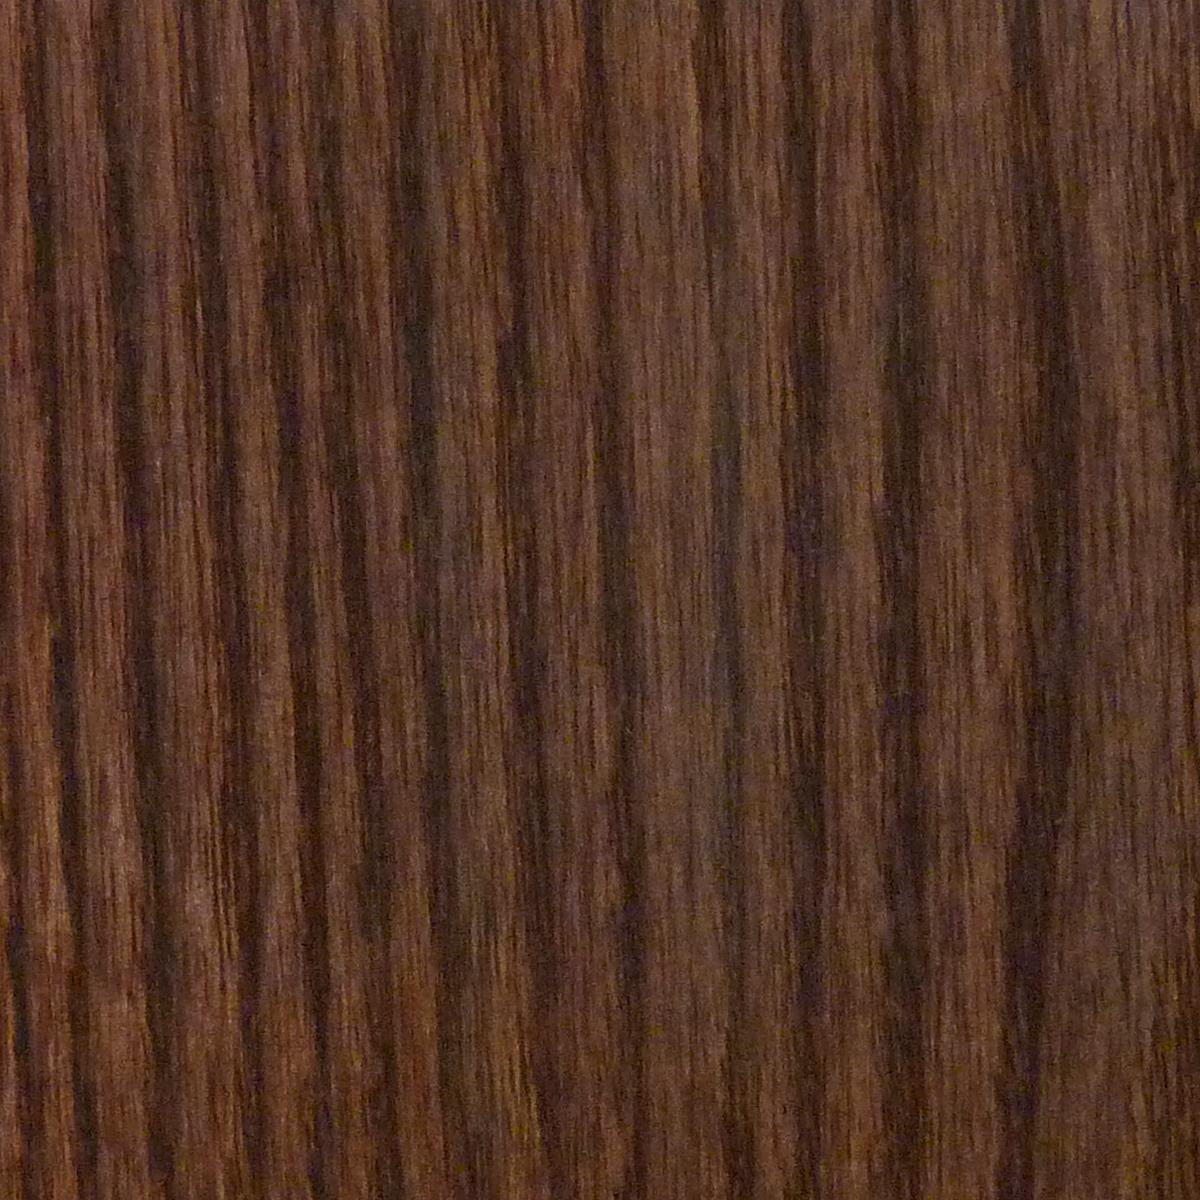 dartfords Dark Rich Mahogany Interior Spirit Based Wood Dye - 230ml Tin